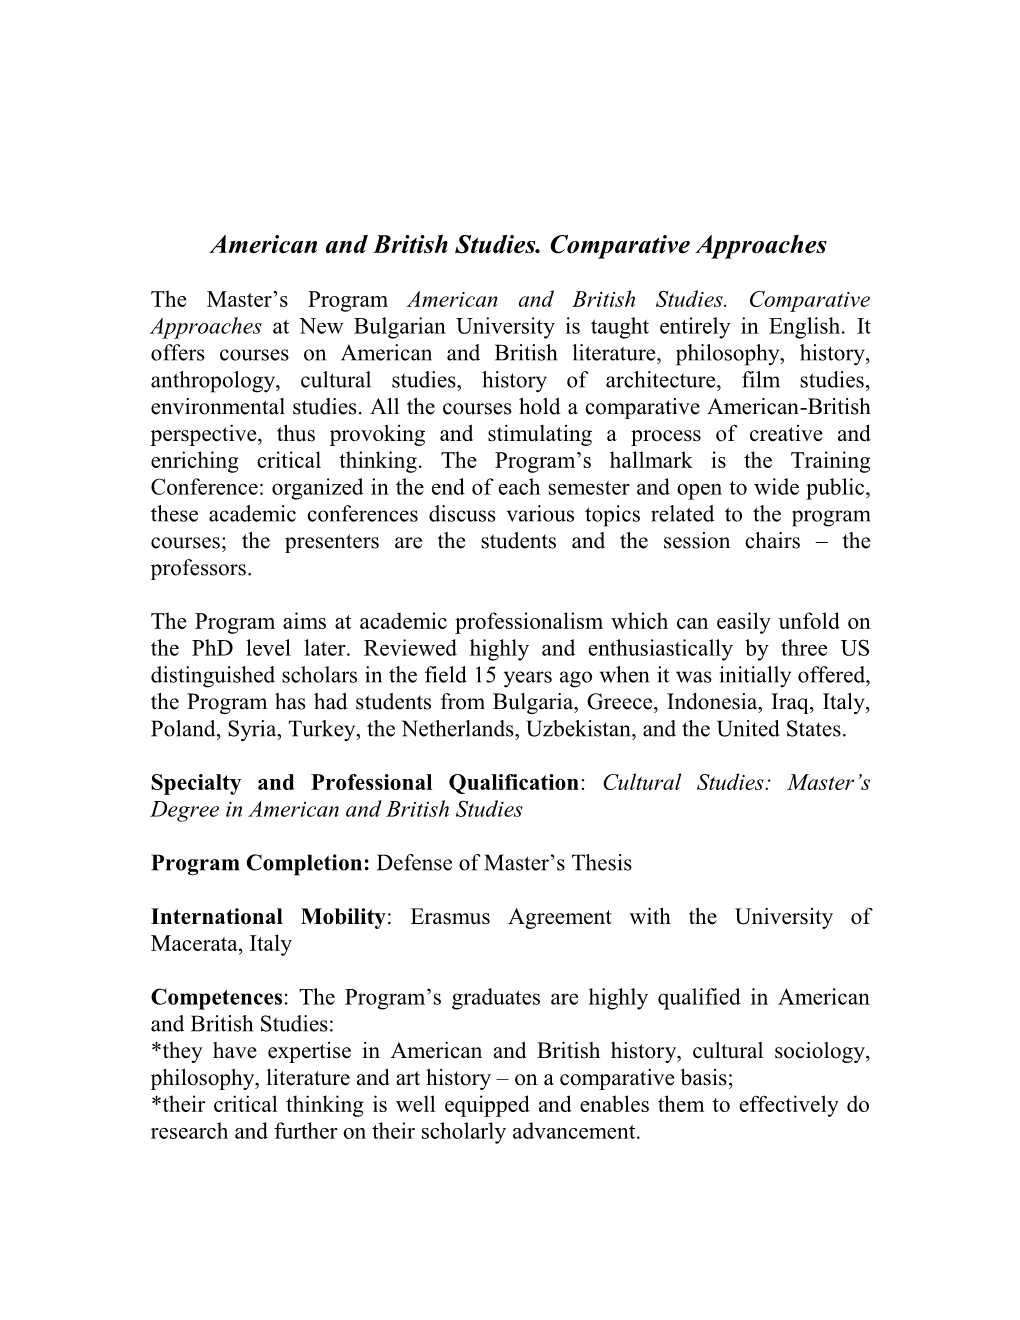 The Master's Program American and British Studies